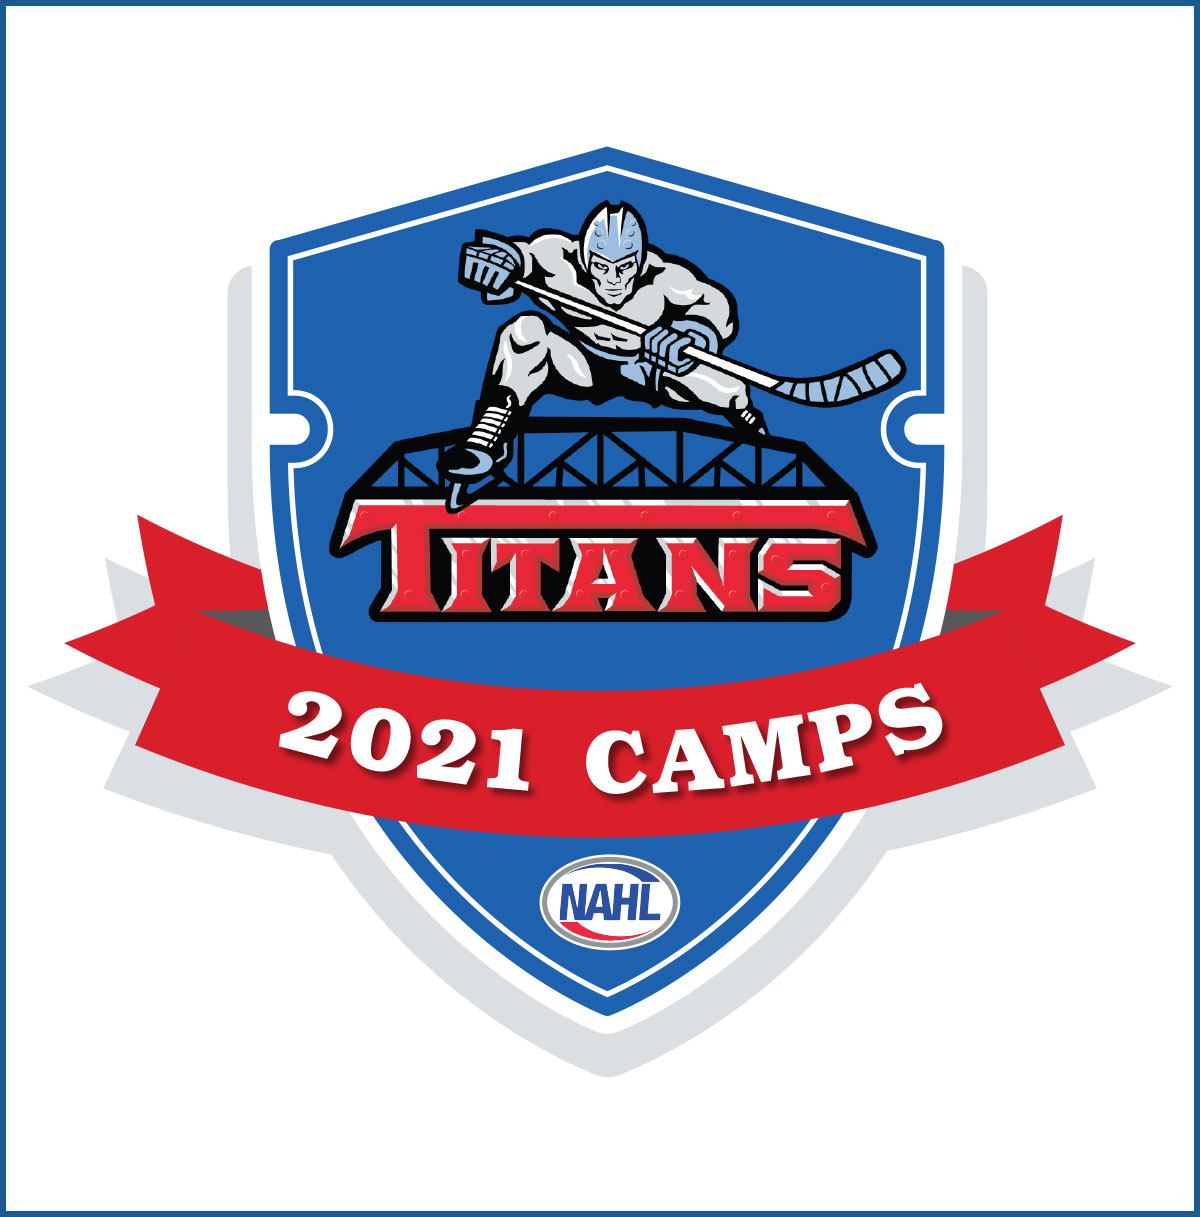 NAHL New Jersey Titans 2021 Camps